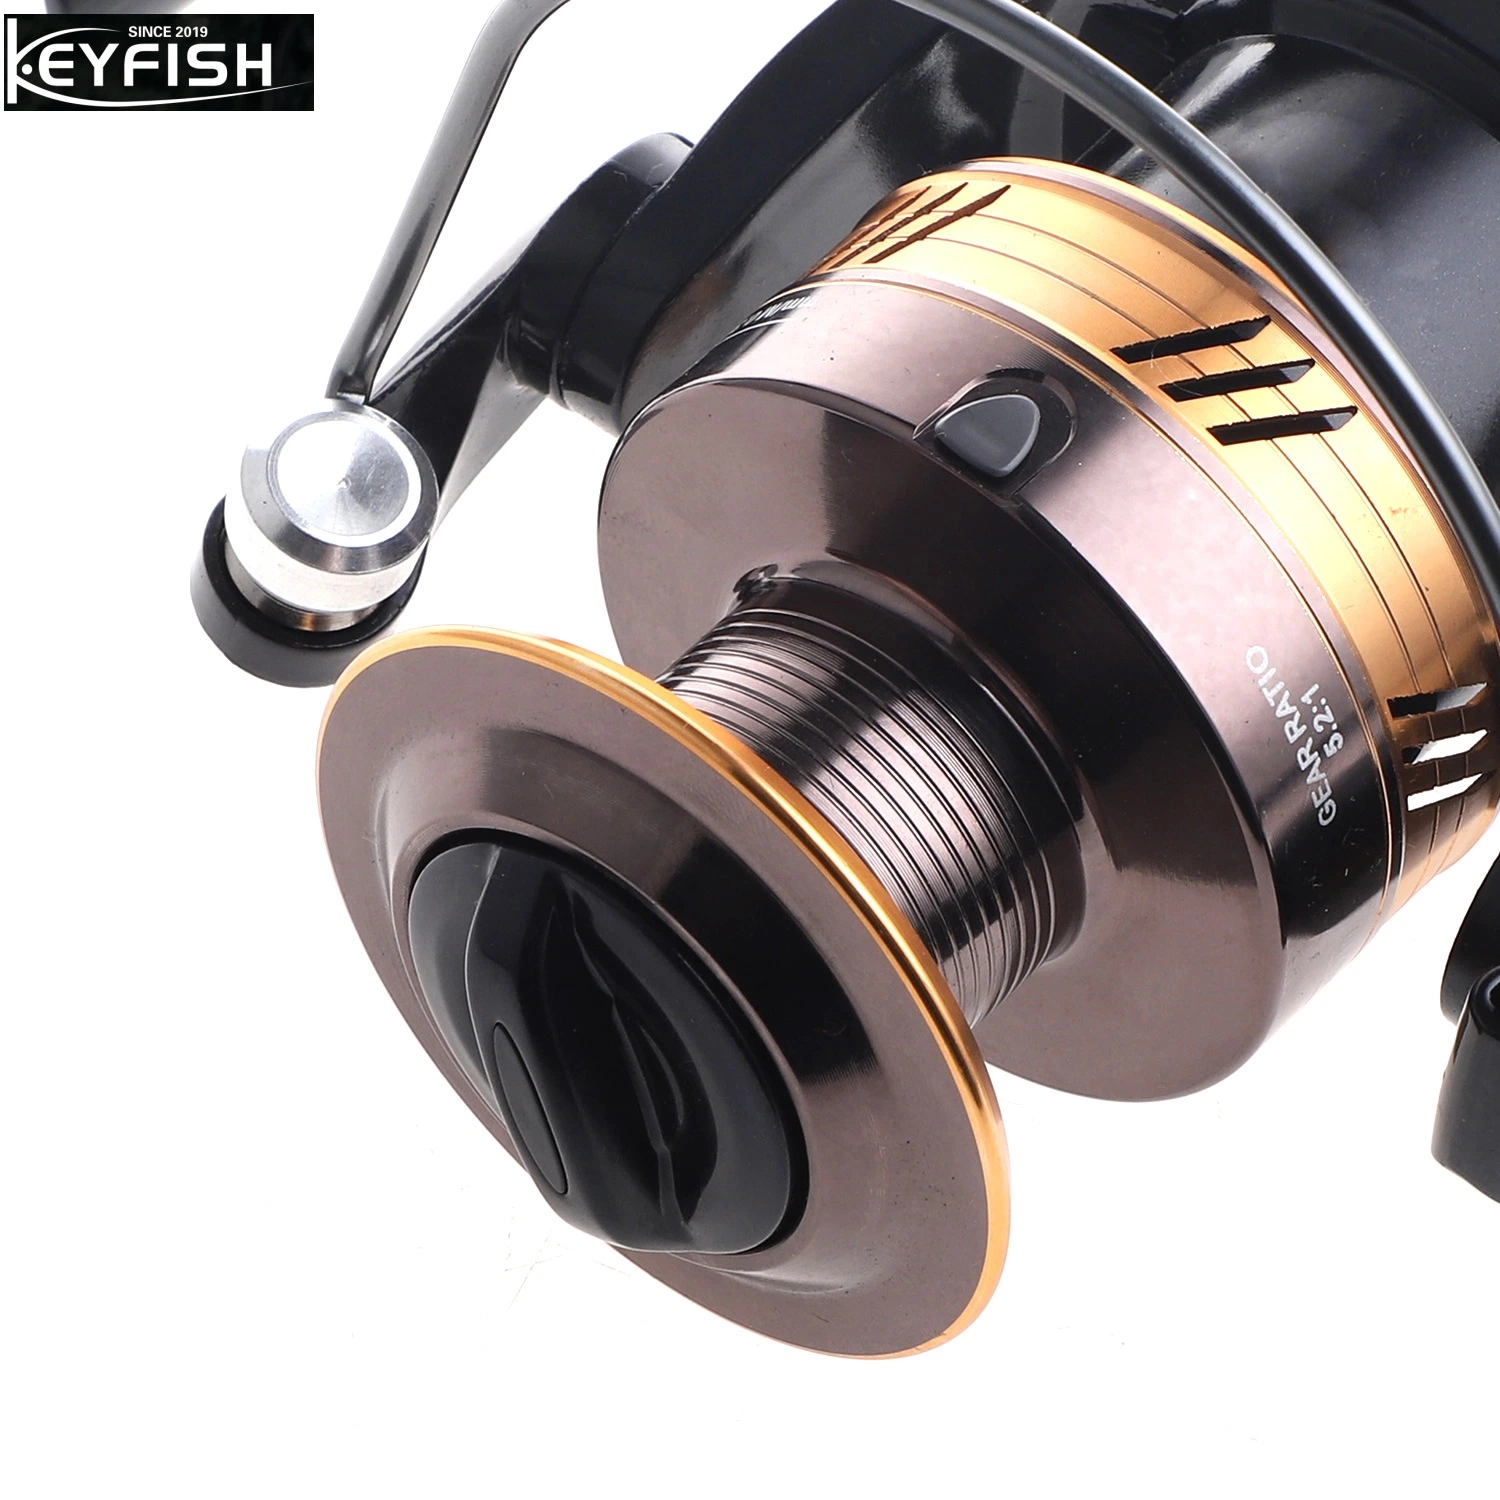 Keyfish Sales Well Power FC1000-7000 Gear Ratio 5.2: 1 Handle Good Quality Fishing Reels Spinning Reel